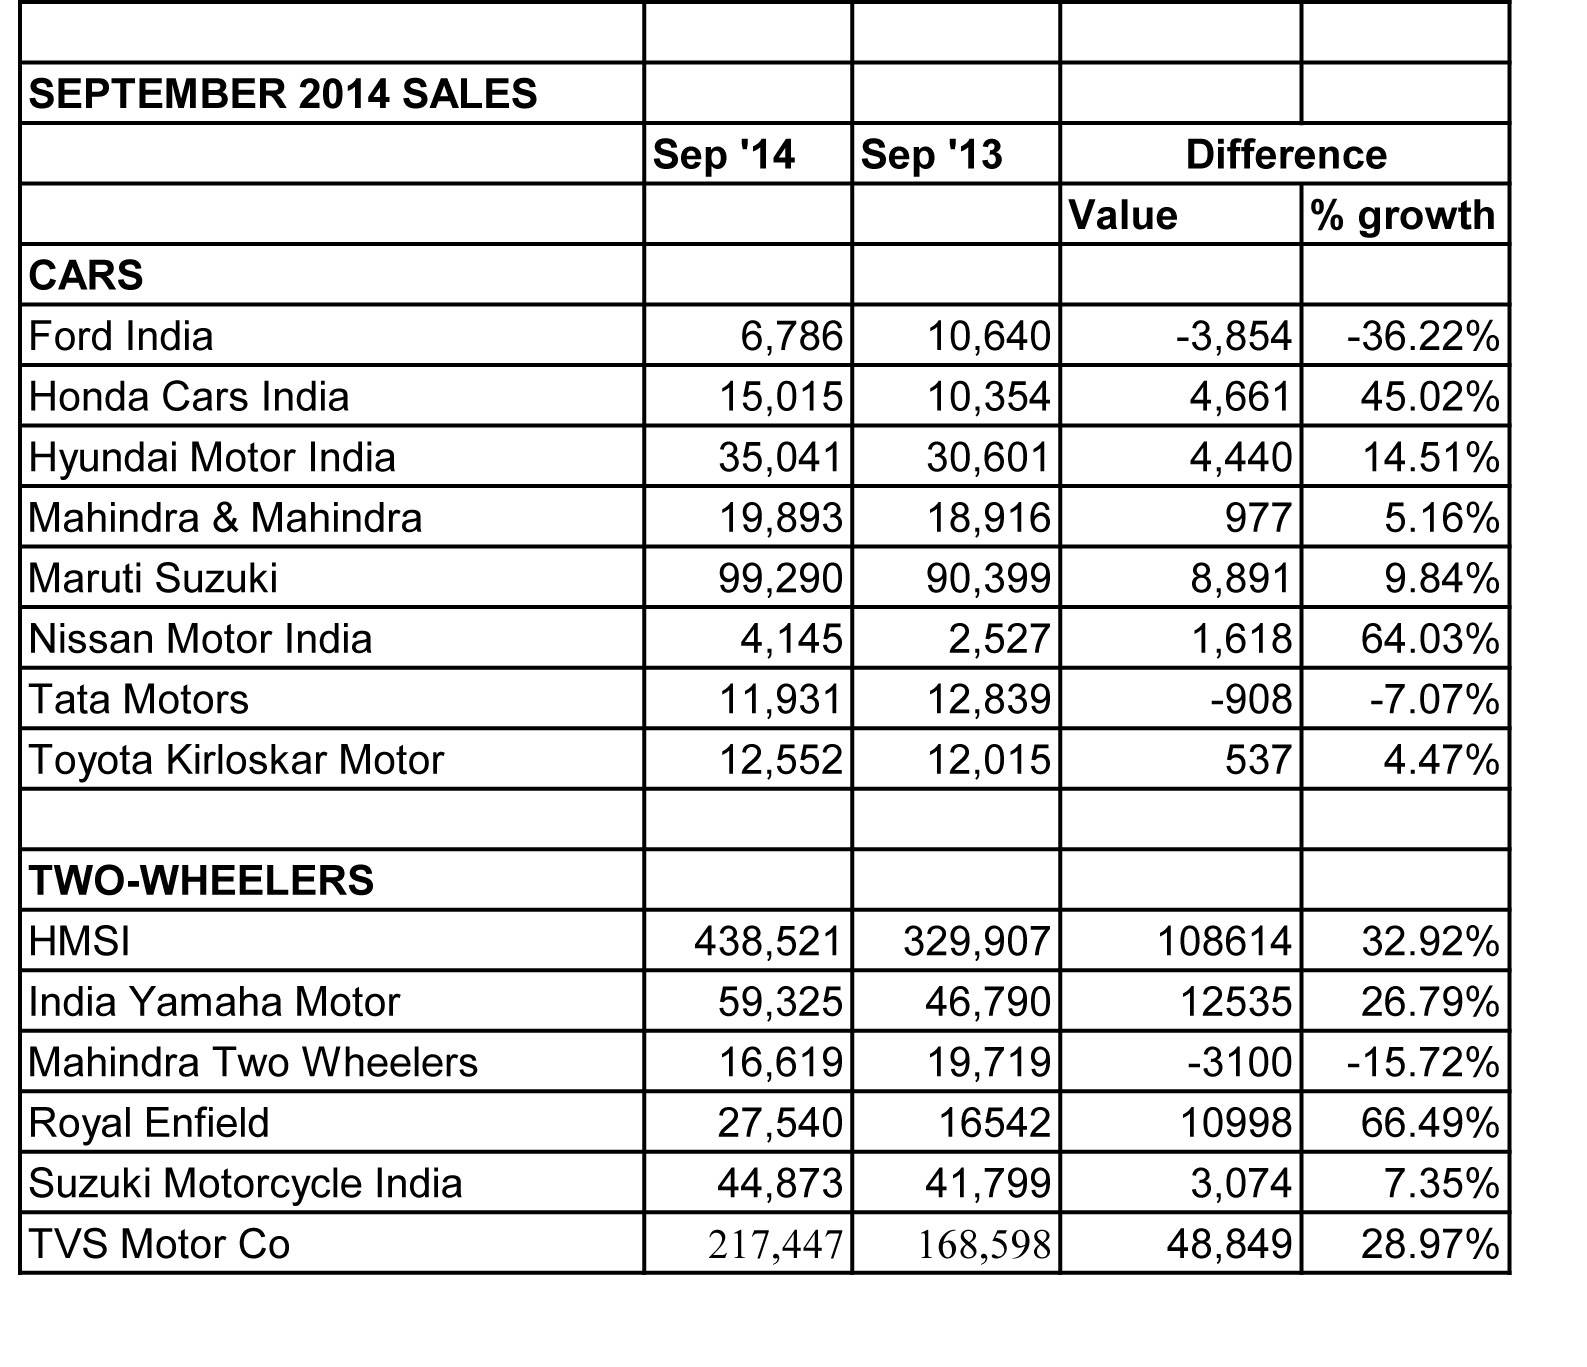 acche-din-sep-2014-sales-data-1